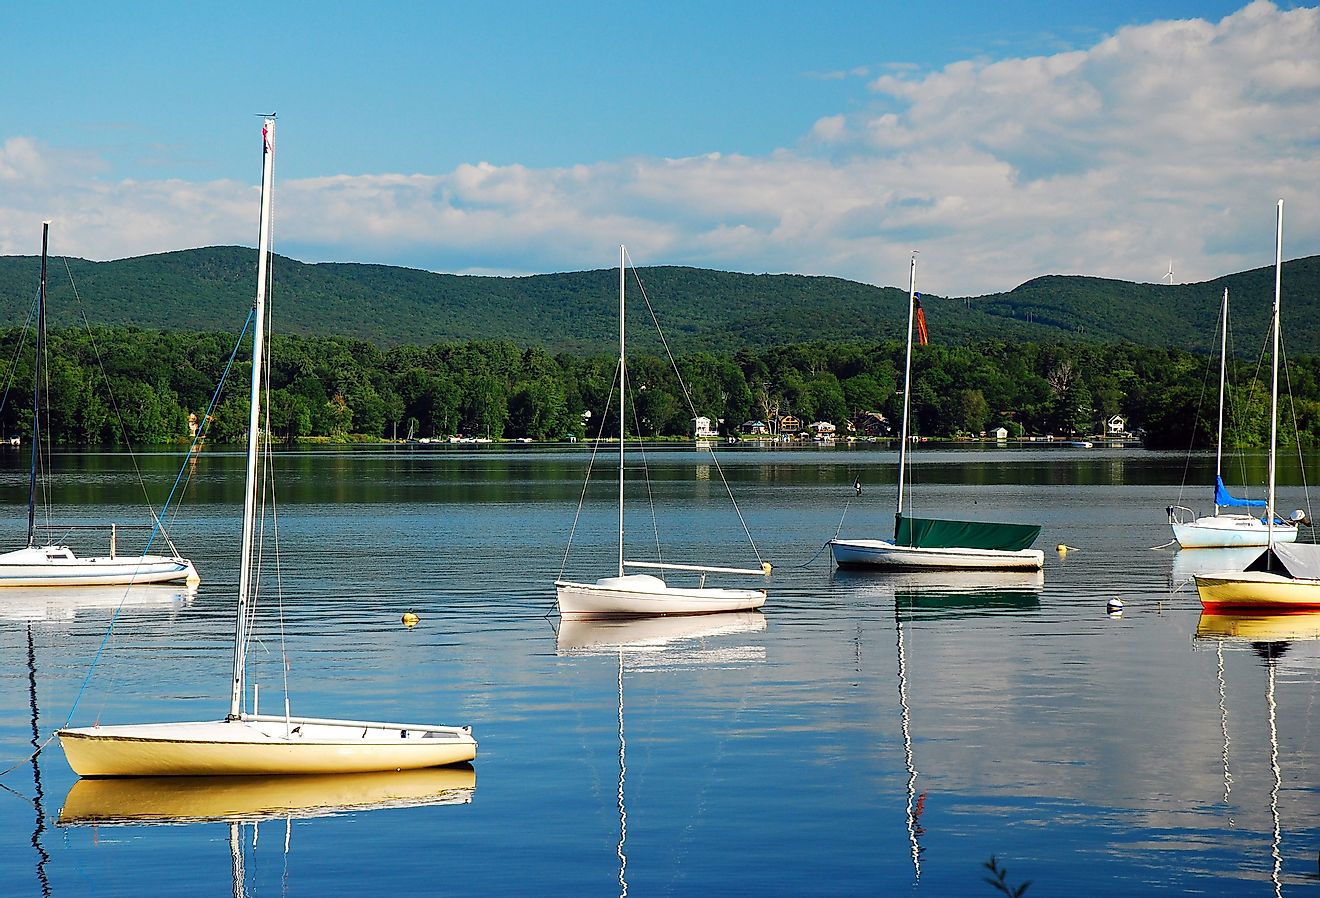 An idyllic day on the lake in the Berkshire Mountains near Pittsfield, Massachusetts. 